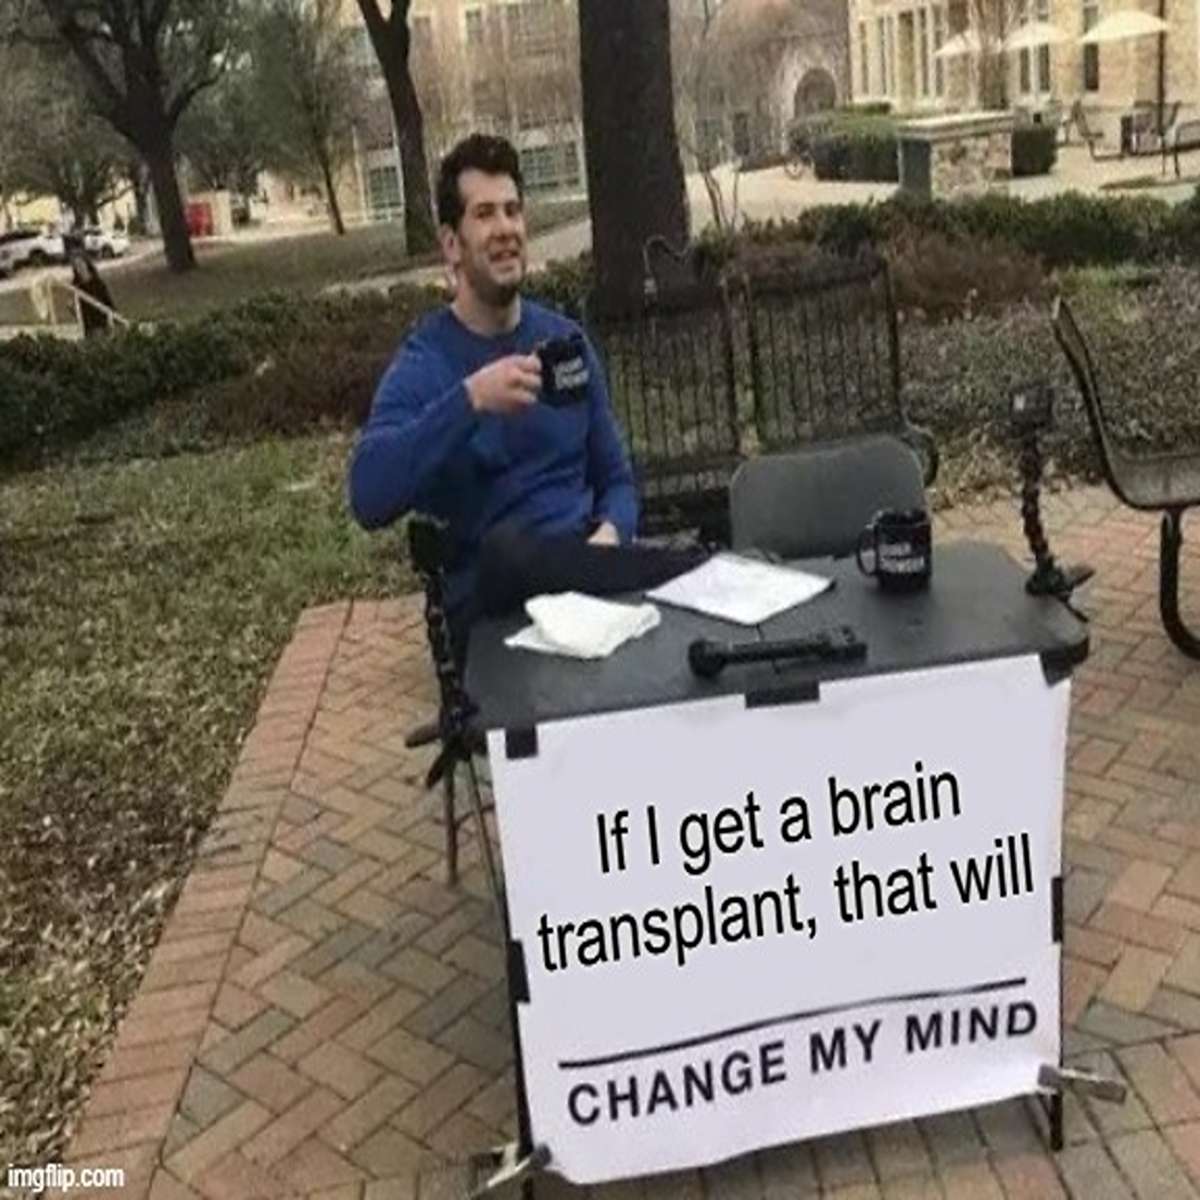 dank memes - sitting - imgflip.com Palk If I get a brain transplant, that will Change My Mind